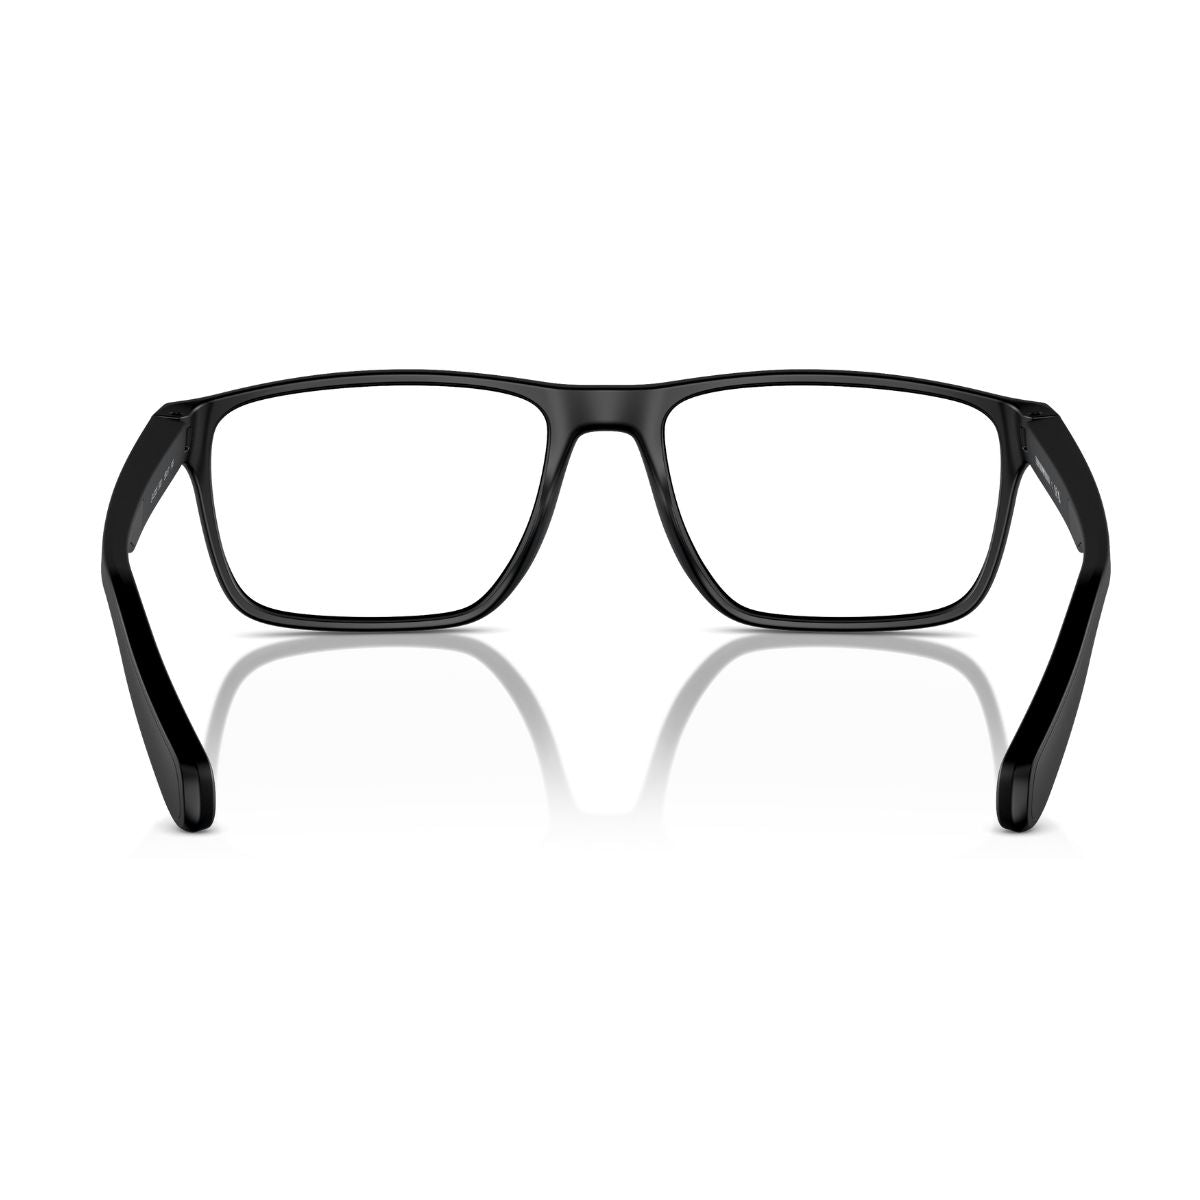 "Emporio Armani 3233 5001 Rectangle Glasses Frame For Men's Online In India At Optorium"